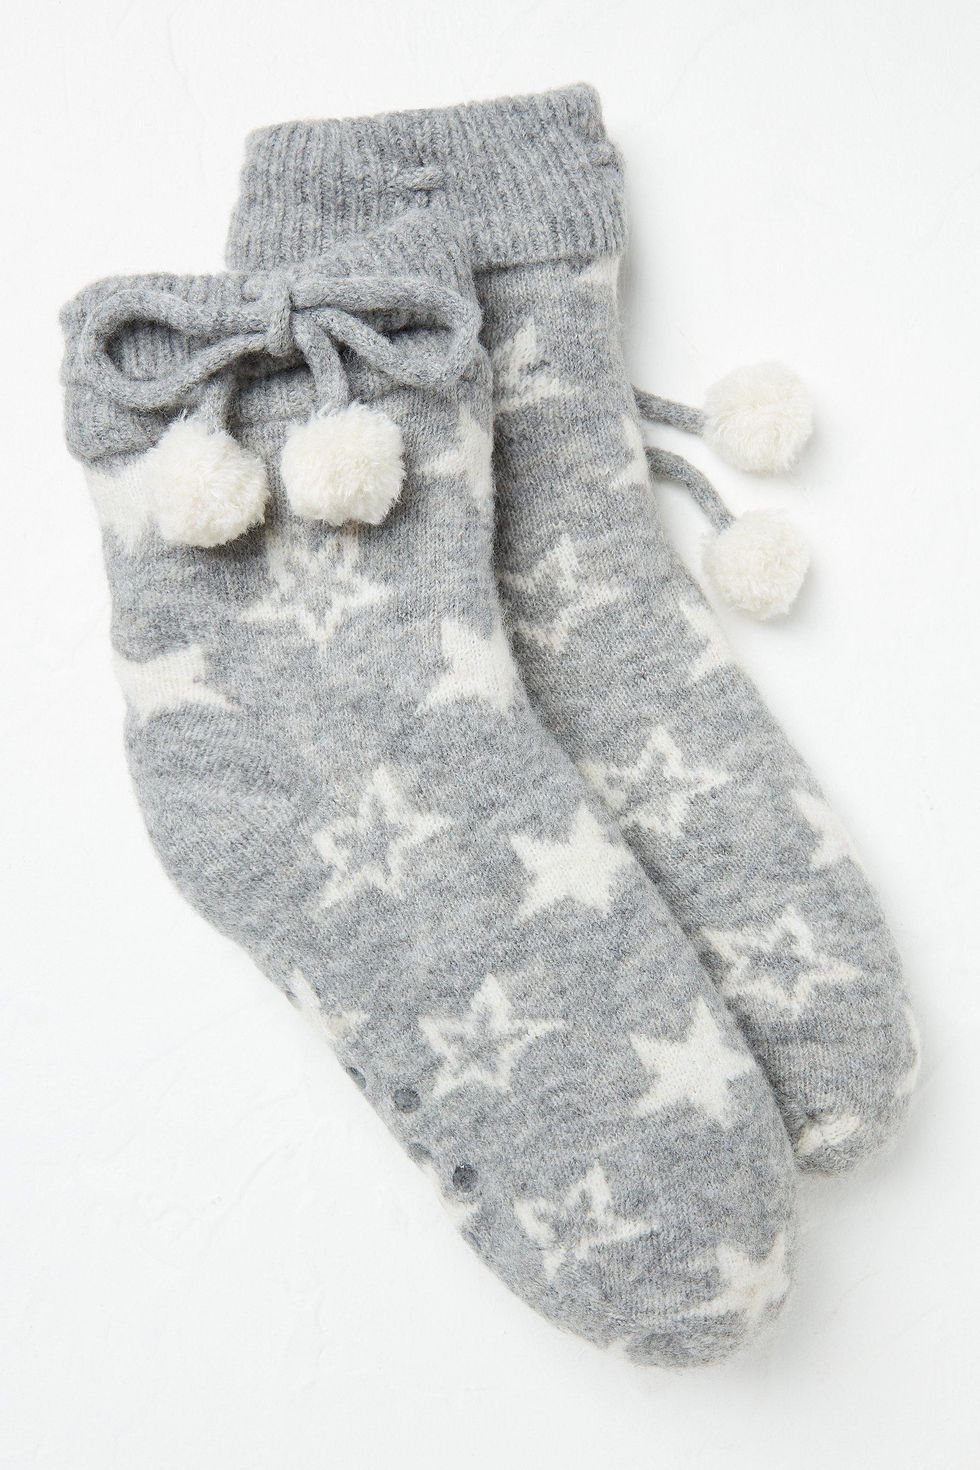 Women's Slipper Socks with Grips Non Slip Soft Cozy Fuzzy Fleece